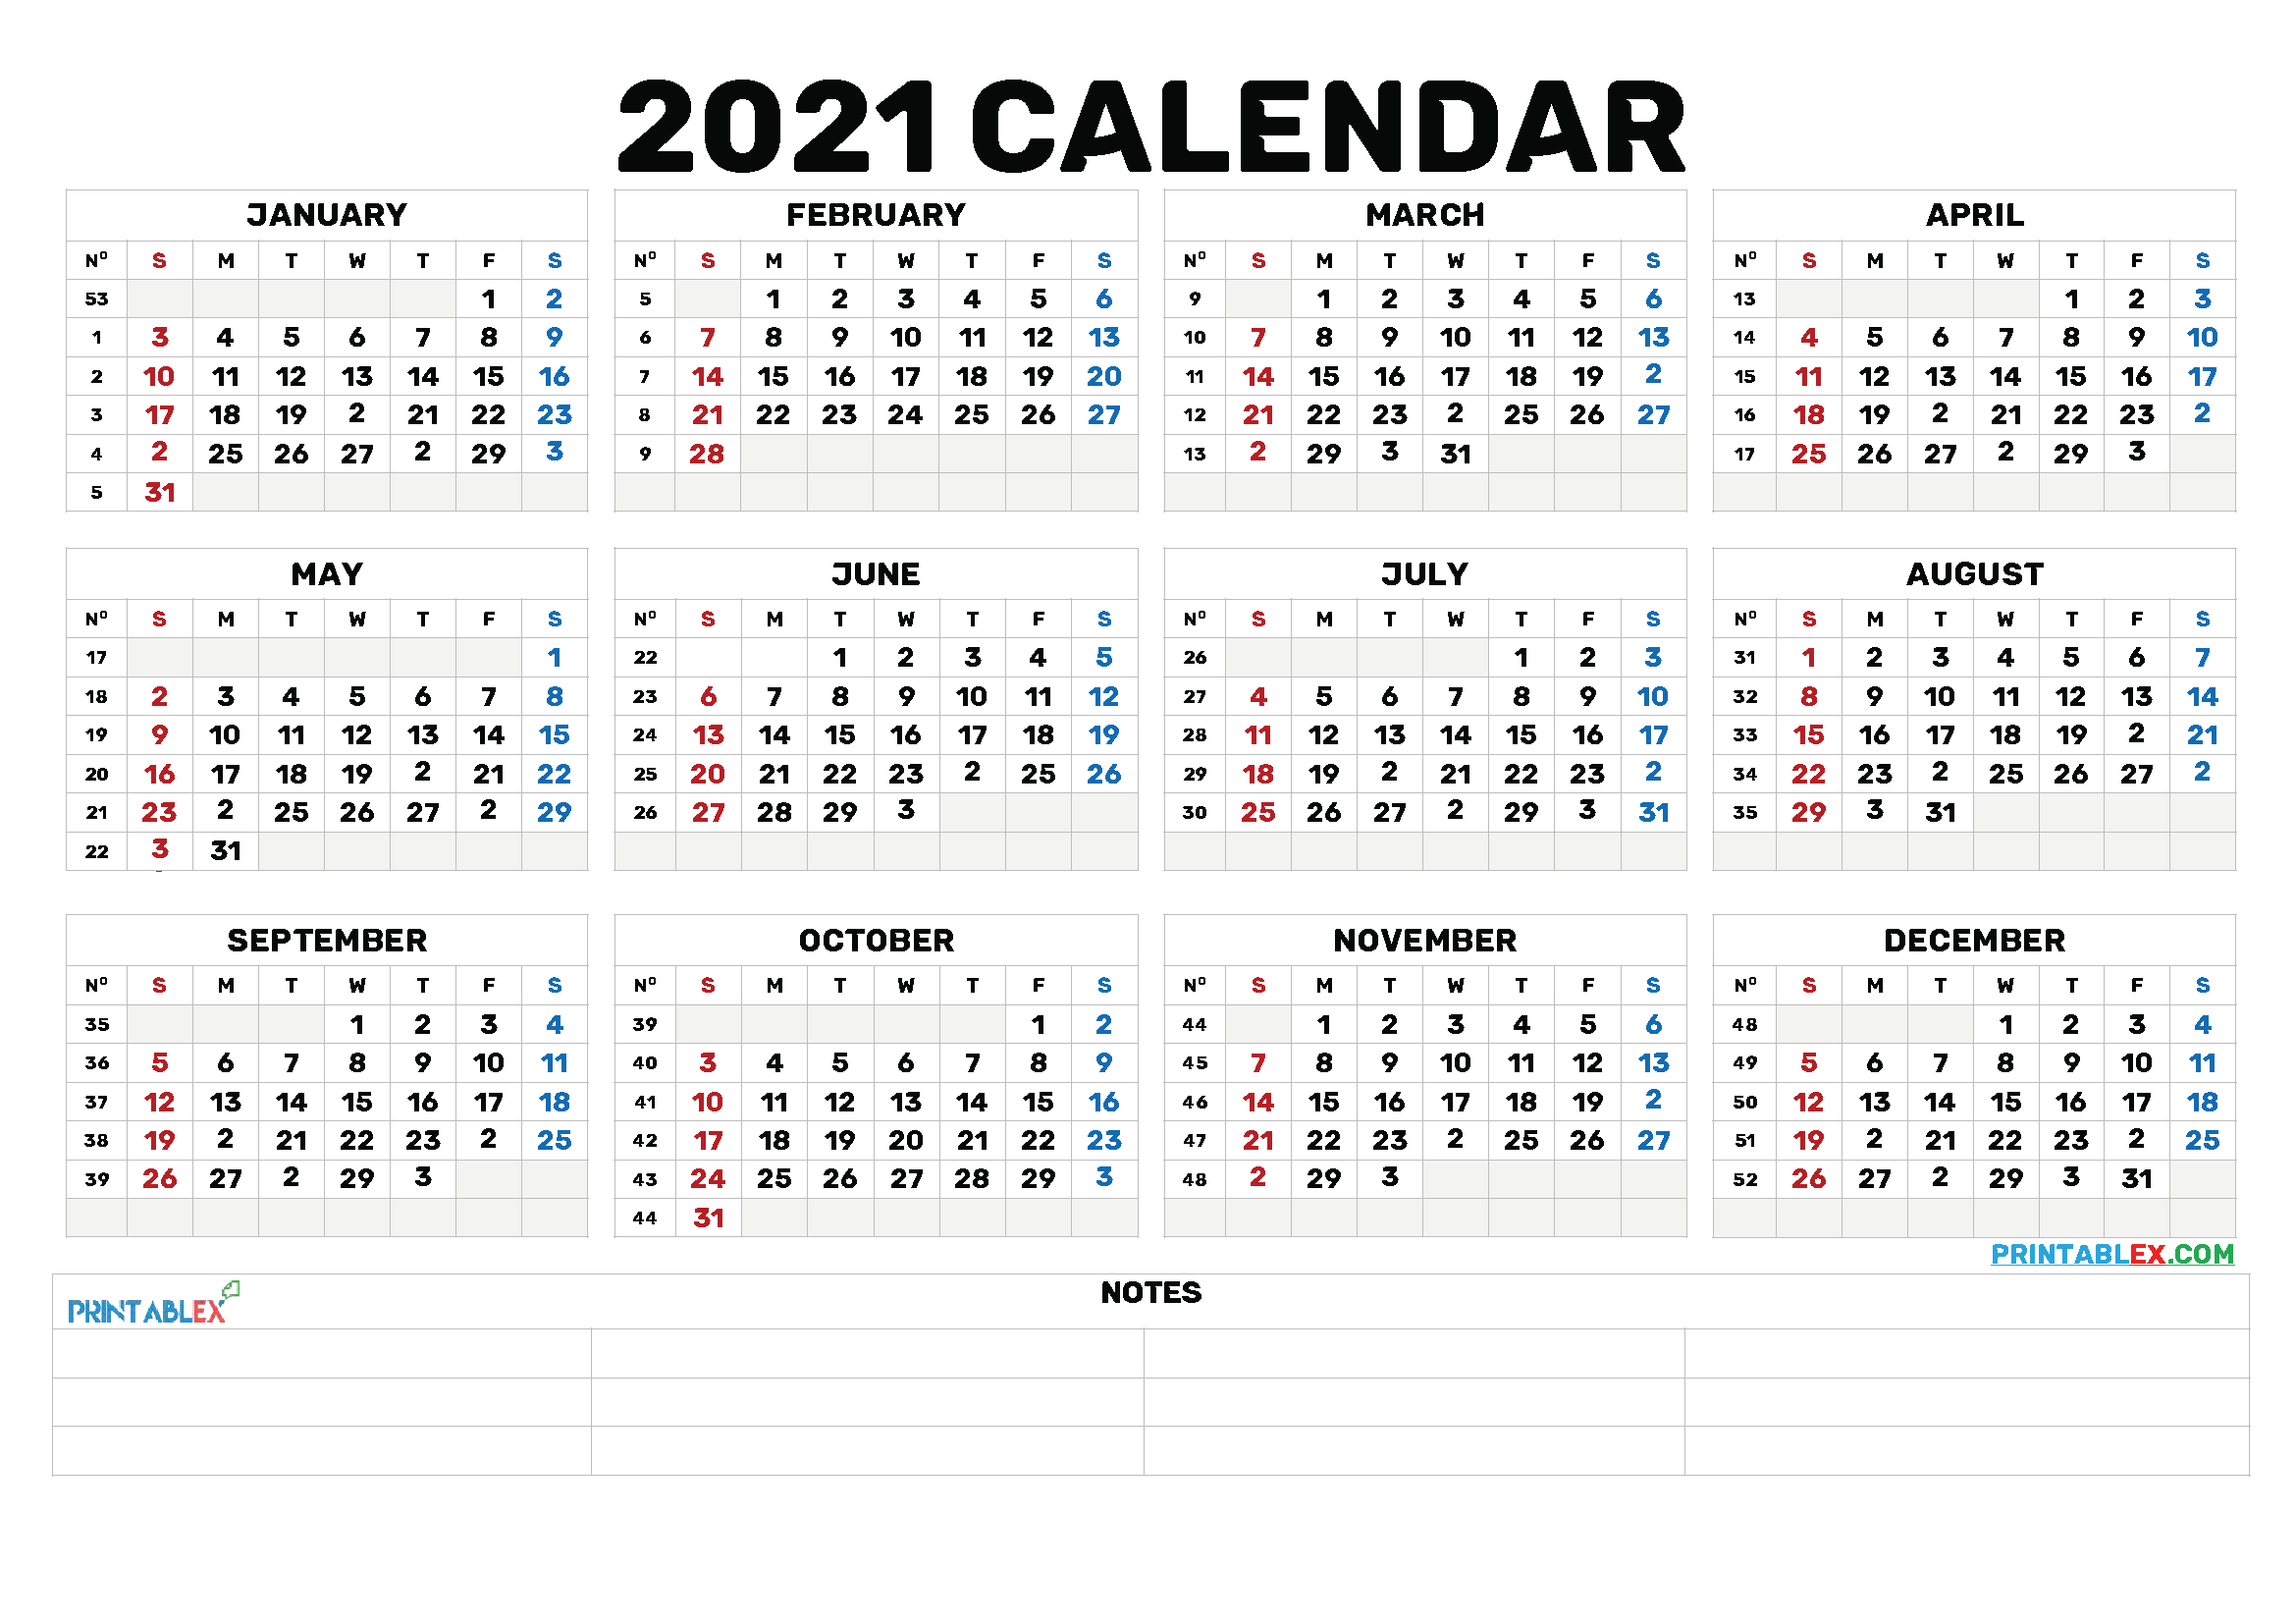 2021 Annual Calendar Printable Calendars 2021 2